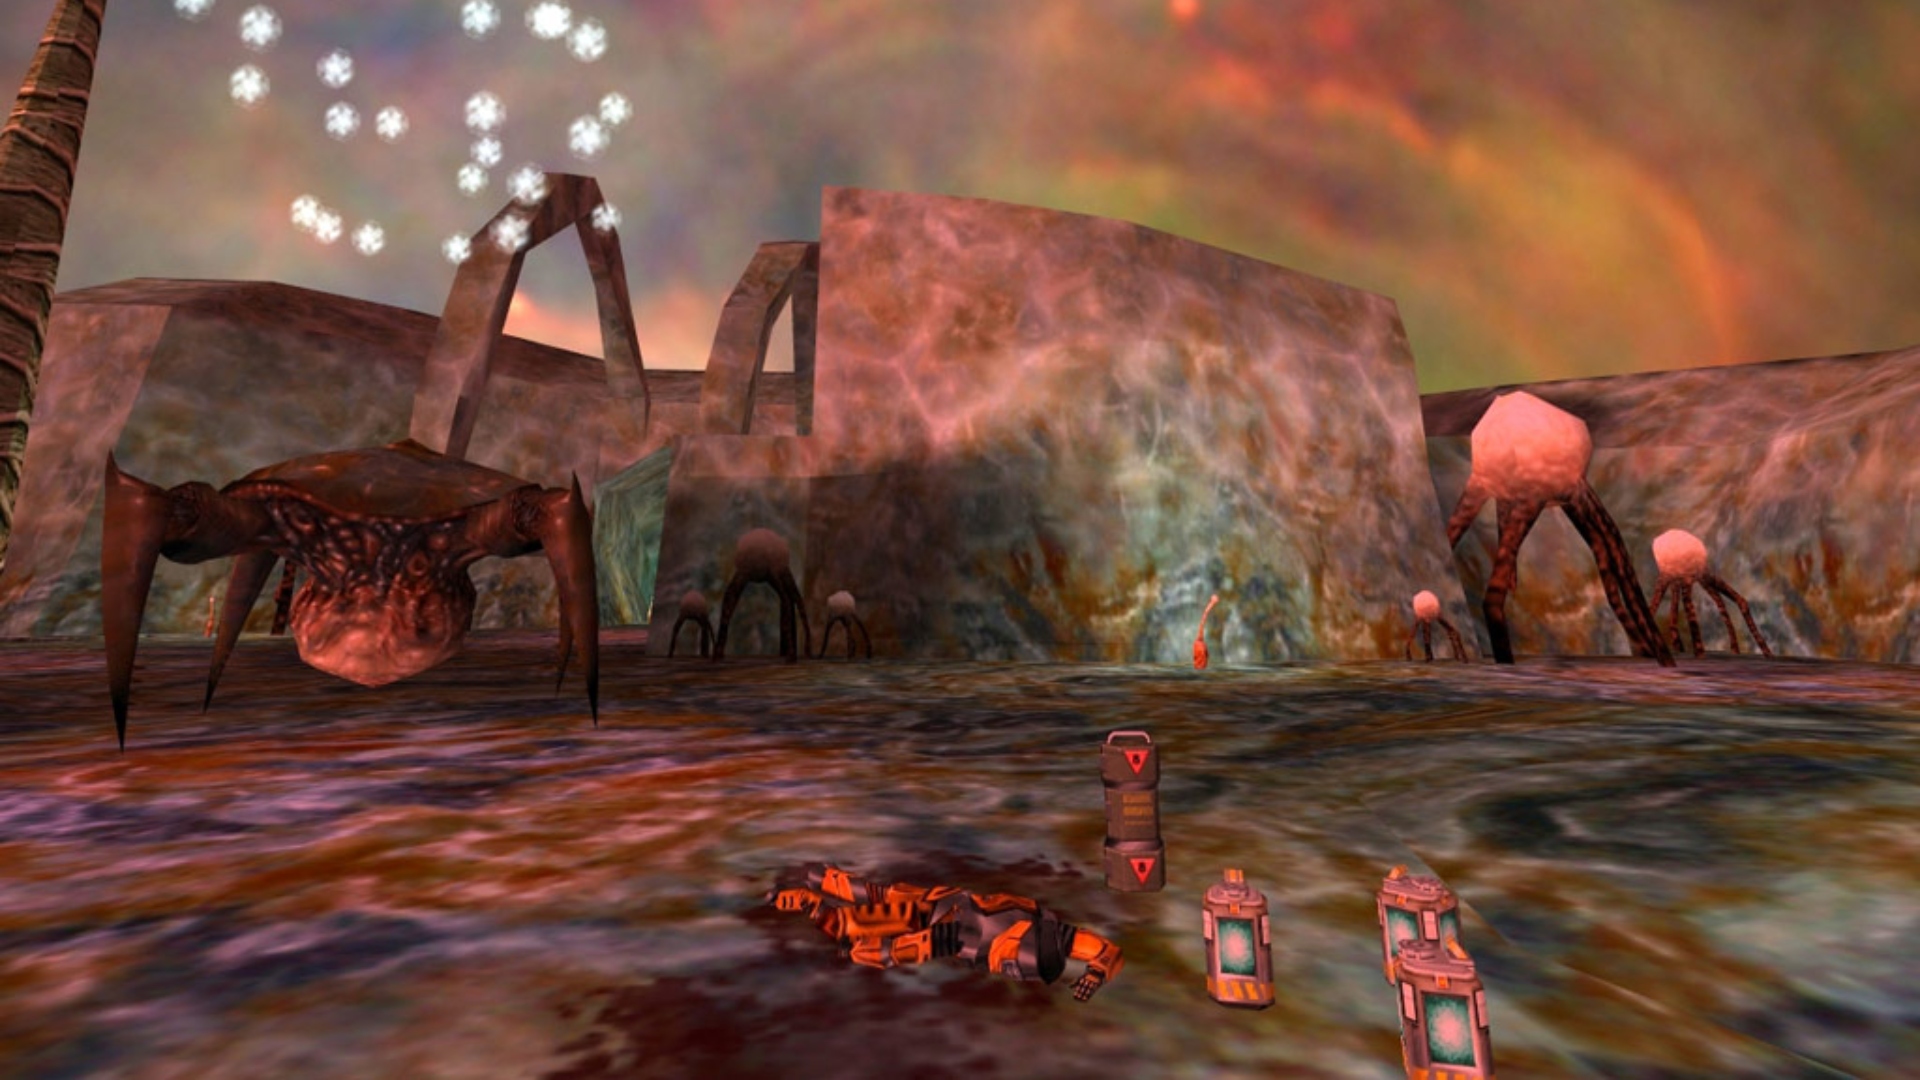 Half-Life retrospective: The alien world Xen from Valve FPS game Half-Life